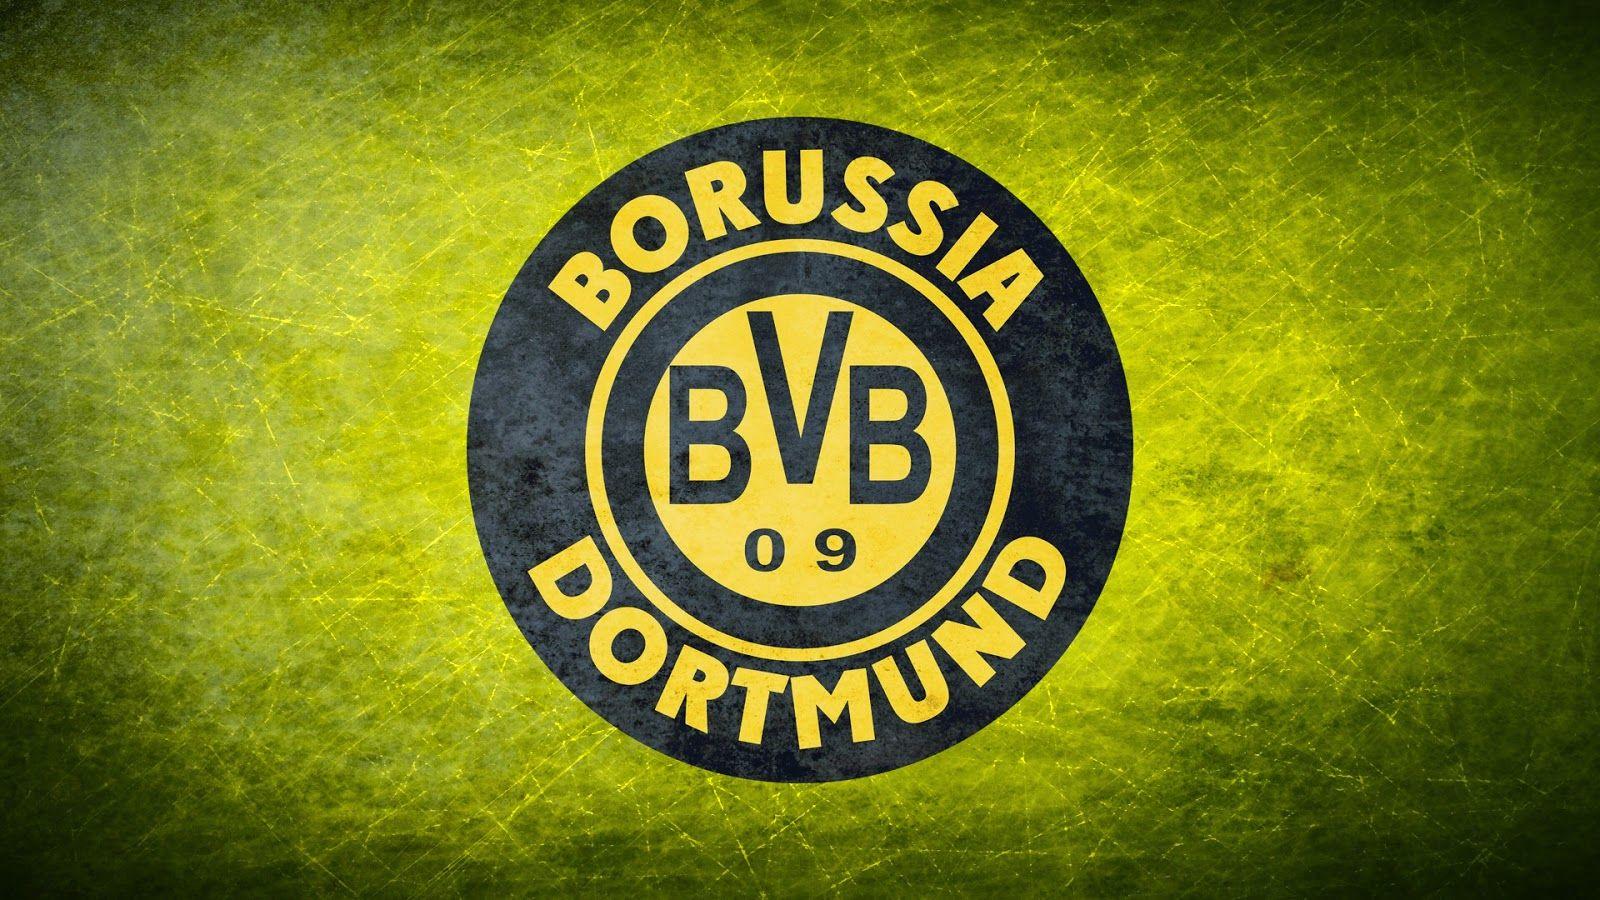 FC Borussia Dortmund 1080p HD Wallpaper